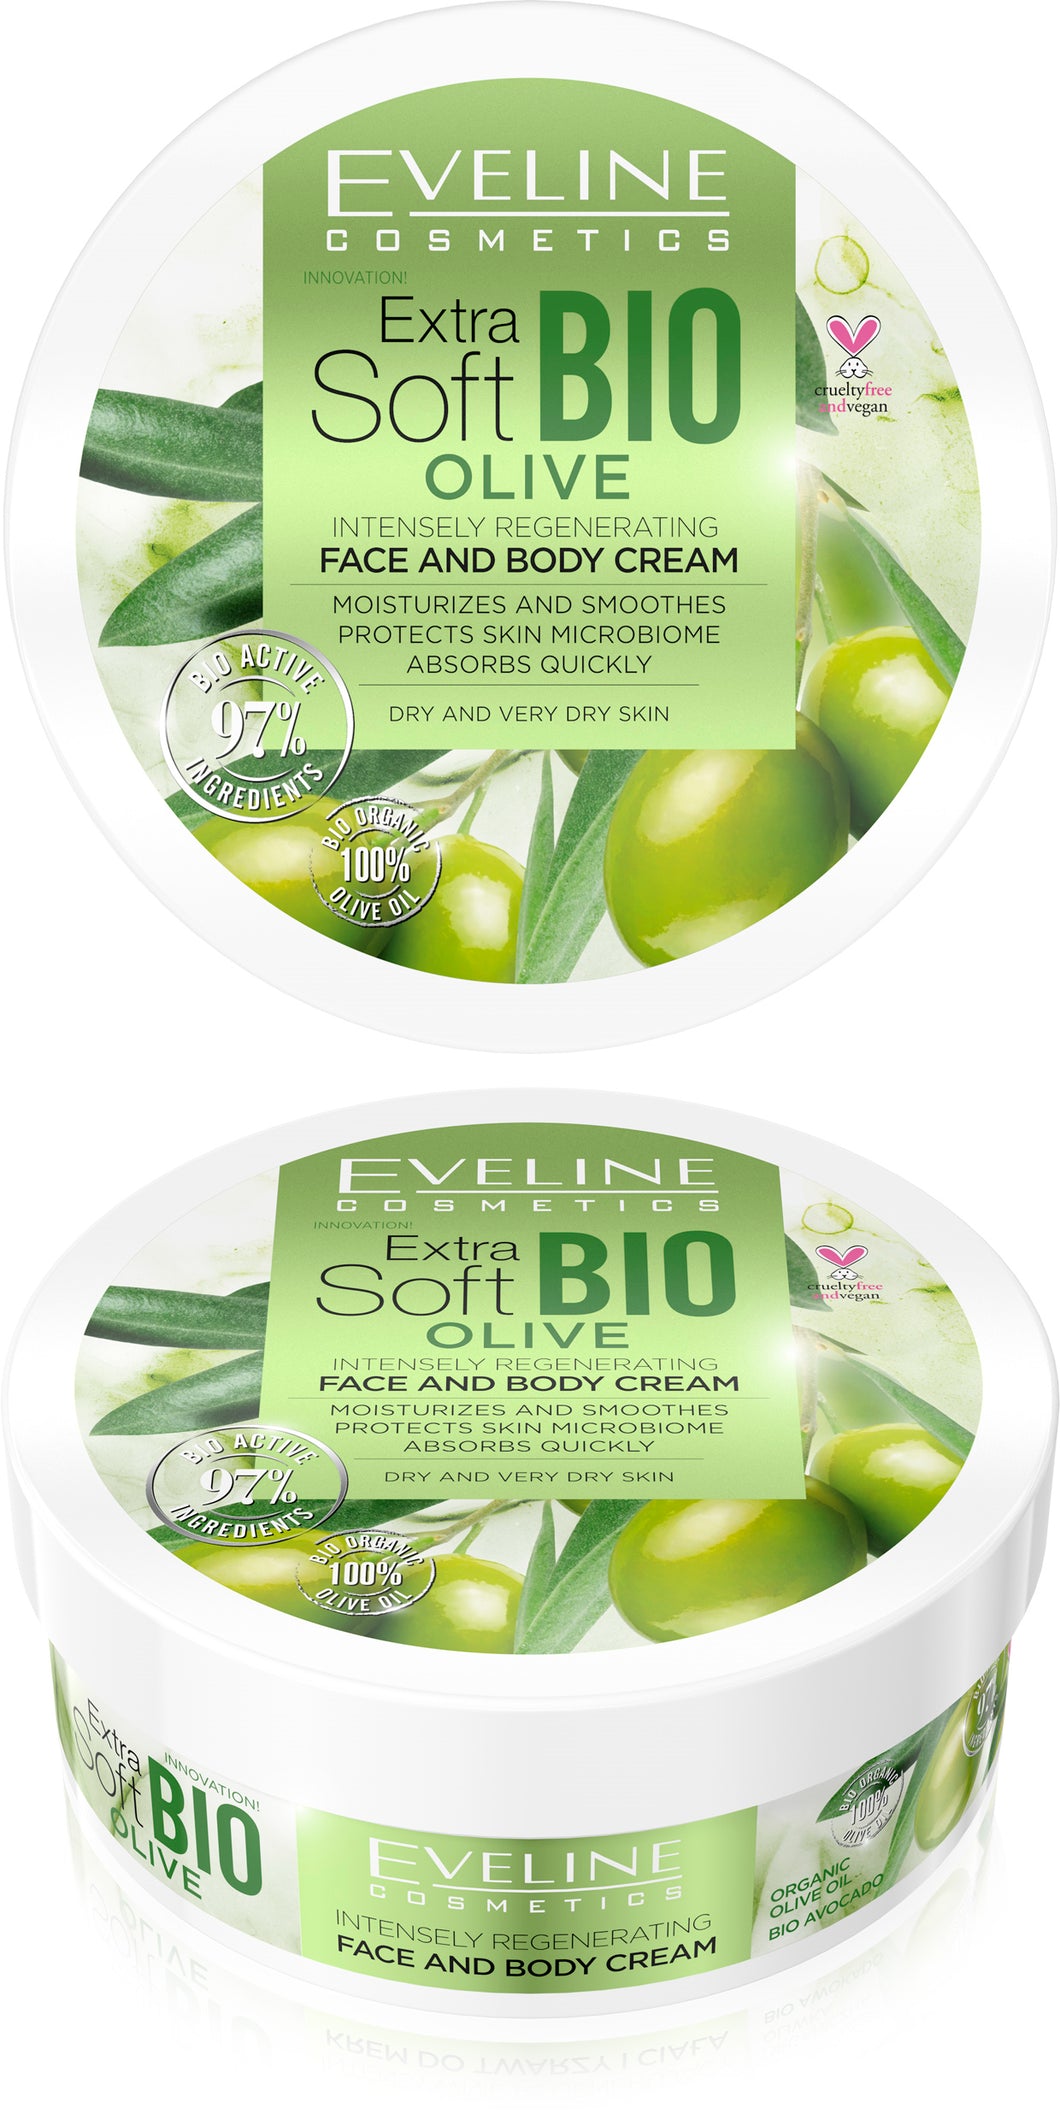 Eveline extra soft Bio olive face/body cream 175ml